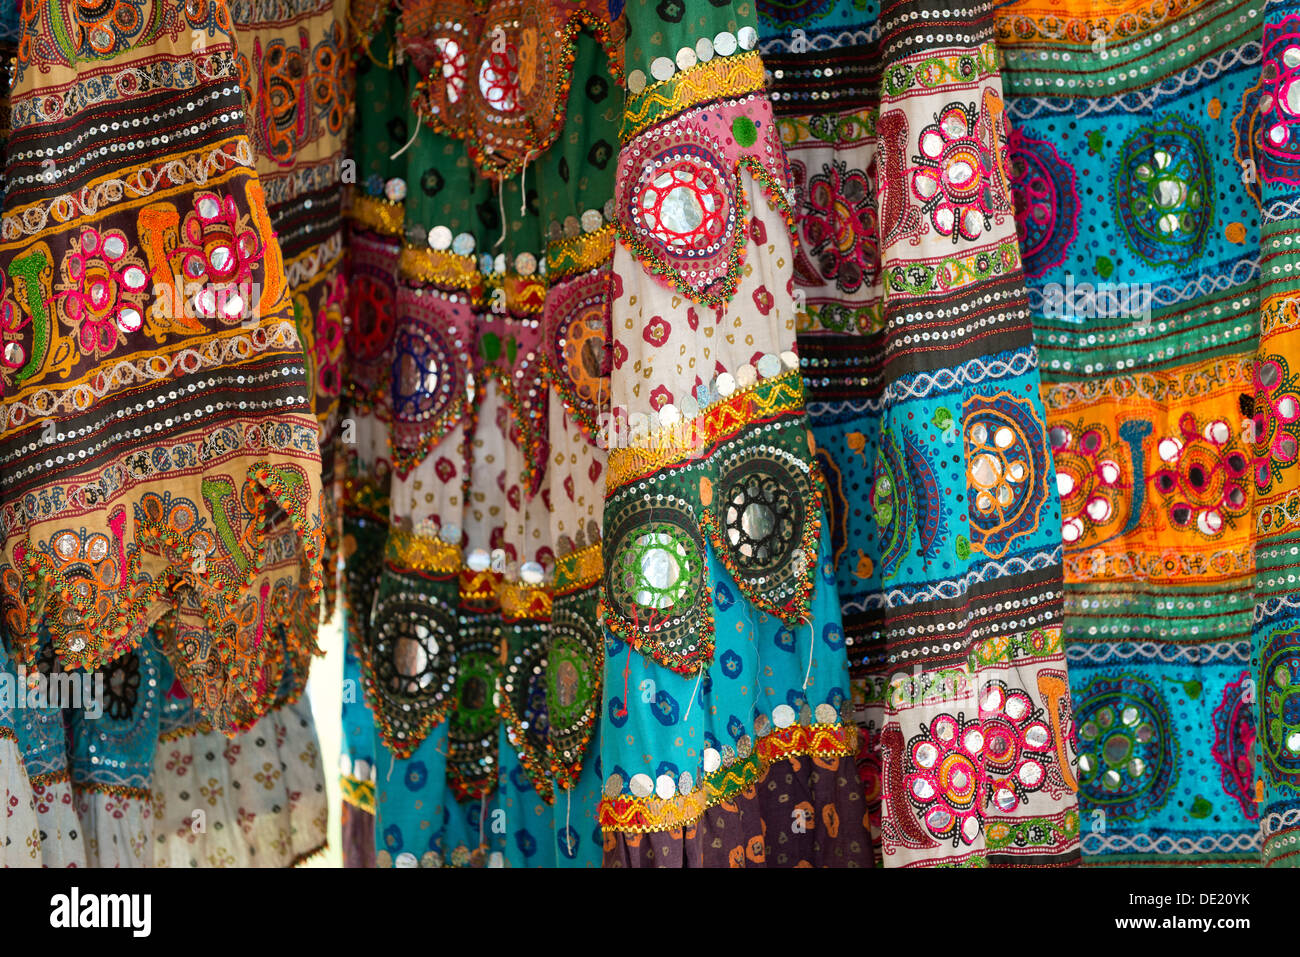 Mantelli variopinti intarsiato con specchi e diversi modelli, dettaglio Udaipur, Rajasthan, India Foto Stock